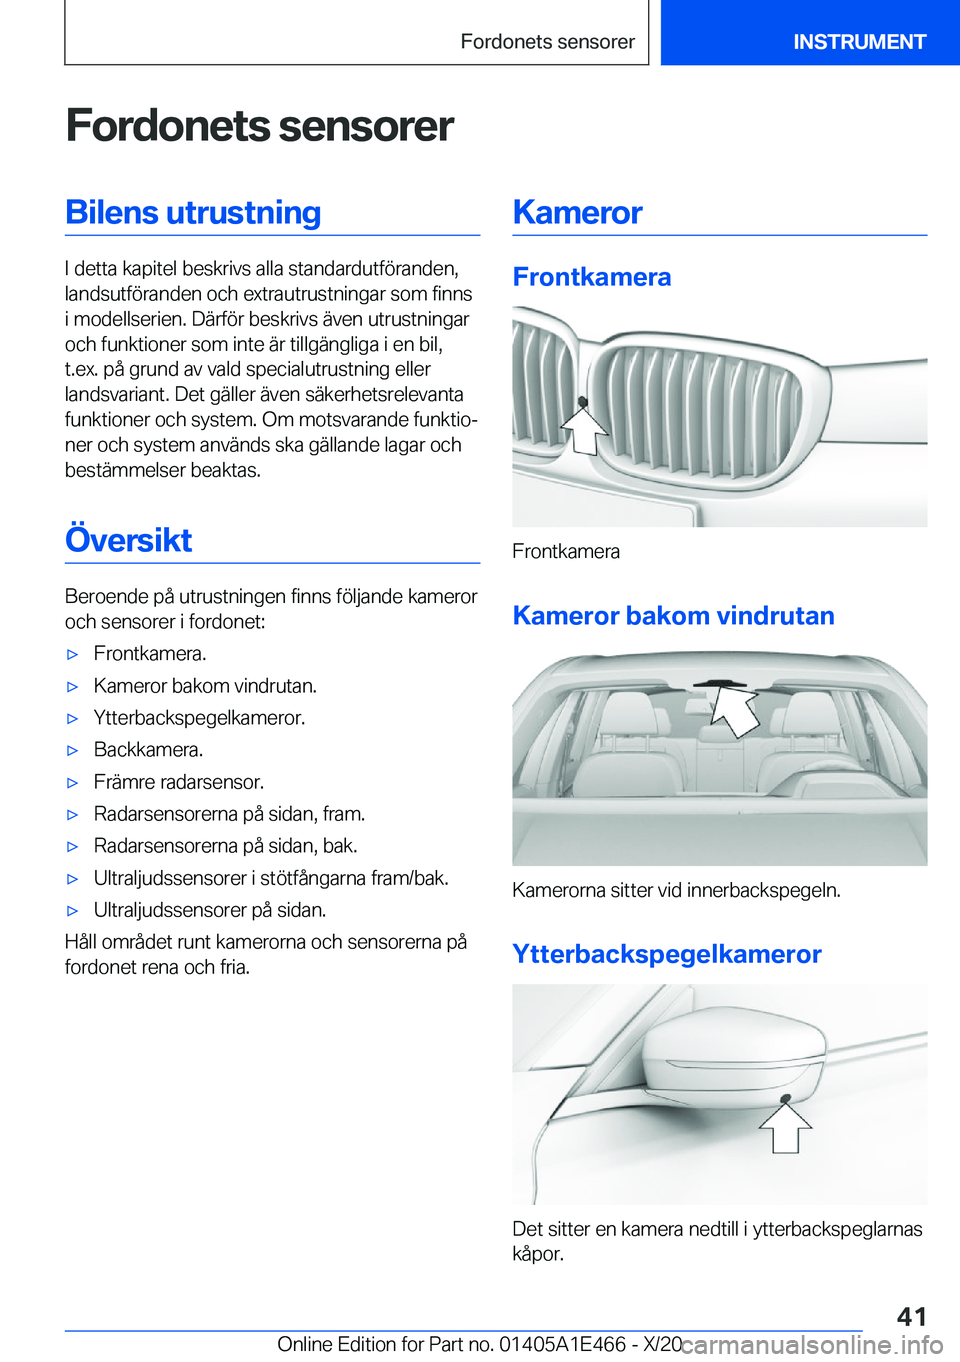 BMW M3 2021  InstruktionsbÖcker (in Swedish) �F�o�r�d�o�n�e�t�s��s�e�n�s�o�r�e�r�B�i�l�e�n�s��u�t�r�u�s�t�n�i�n�g
�I��d�e�t�t�a��k�a�p�i�t�e�l��b�e�s�k�r�i�v�s��a�l�l�a��s�t�a�n�d�a�r�d�u�t�f�